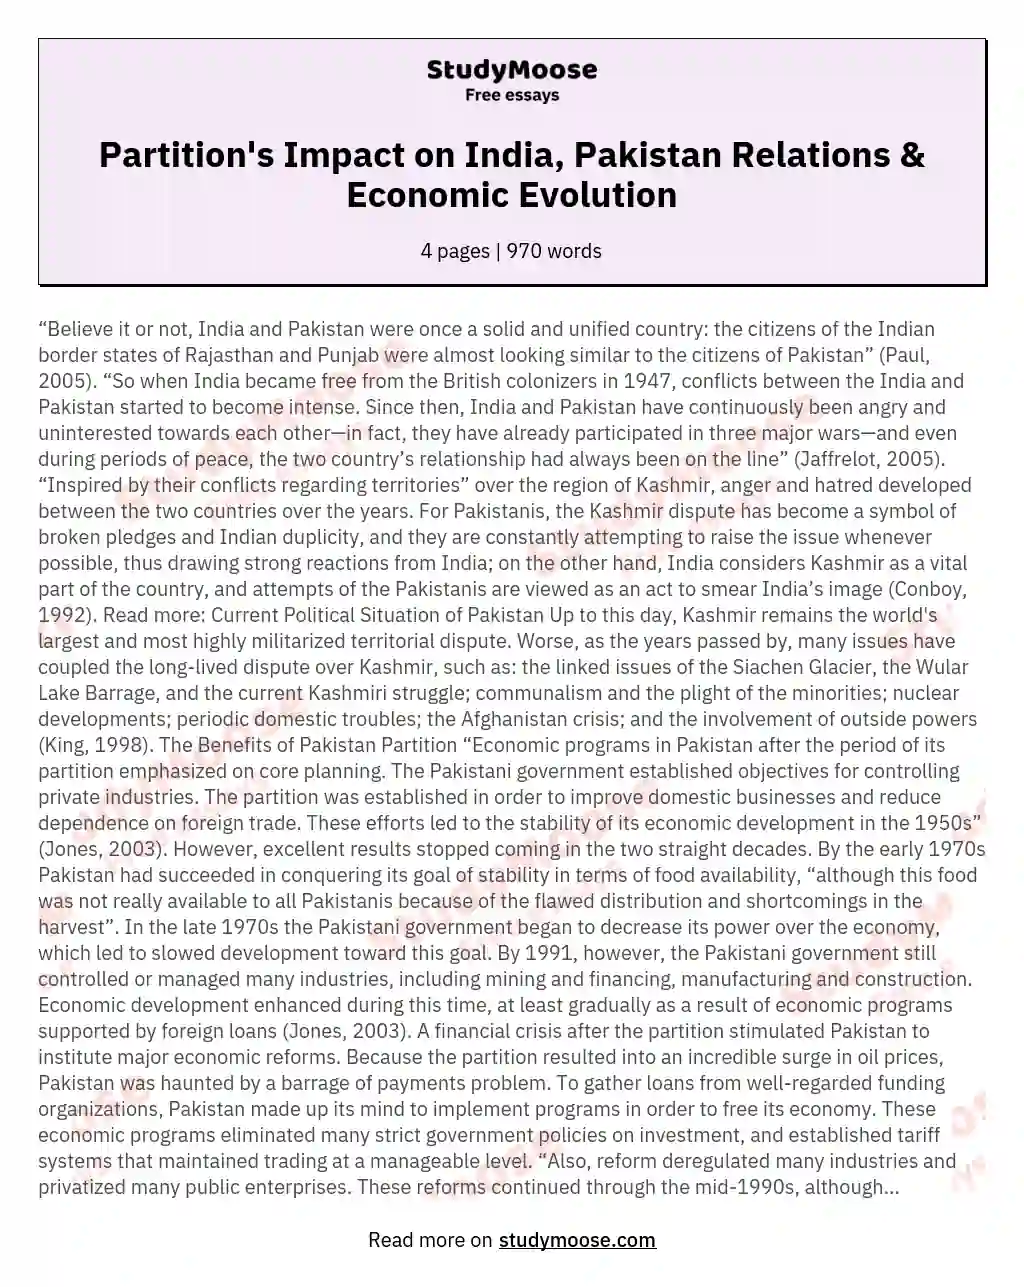 Partition's Impact on India, Pakistan Relations & Economic Evolution essay